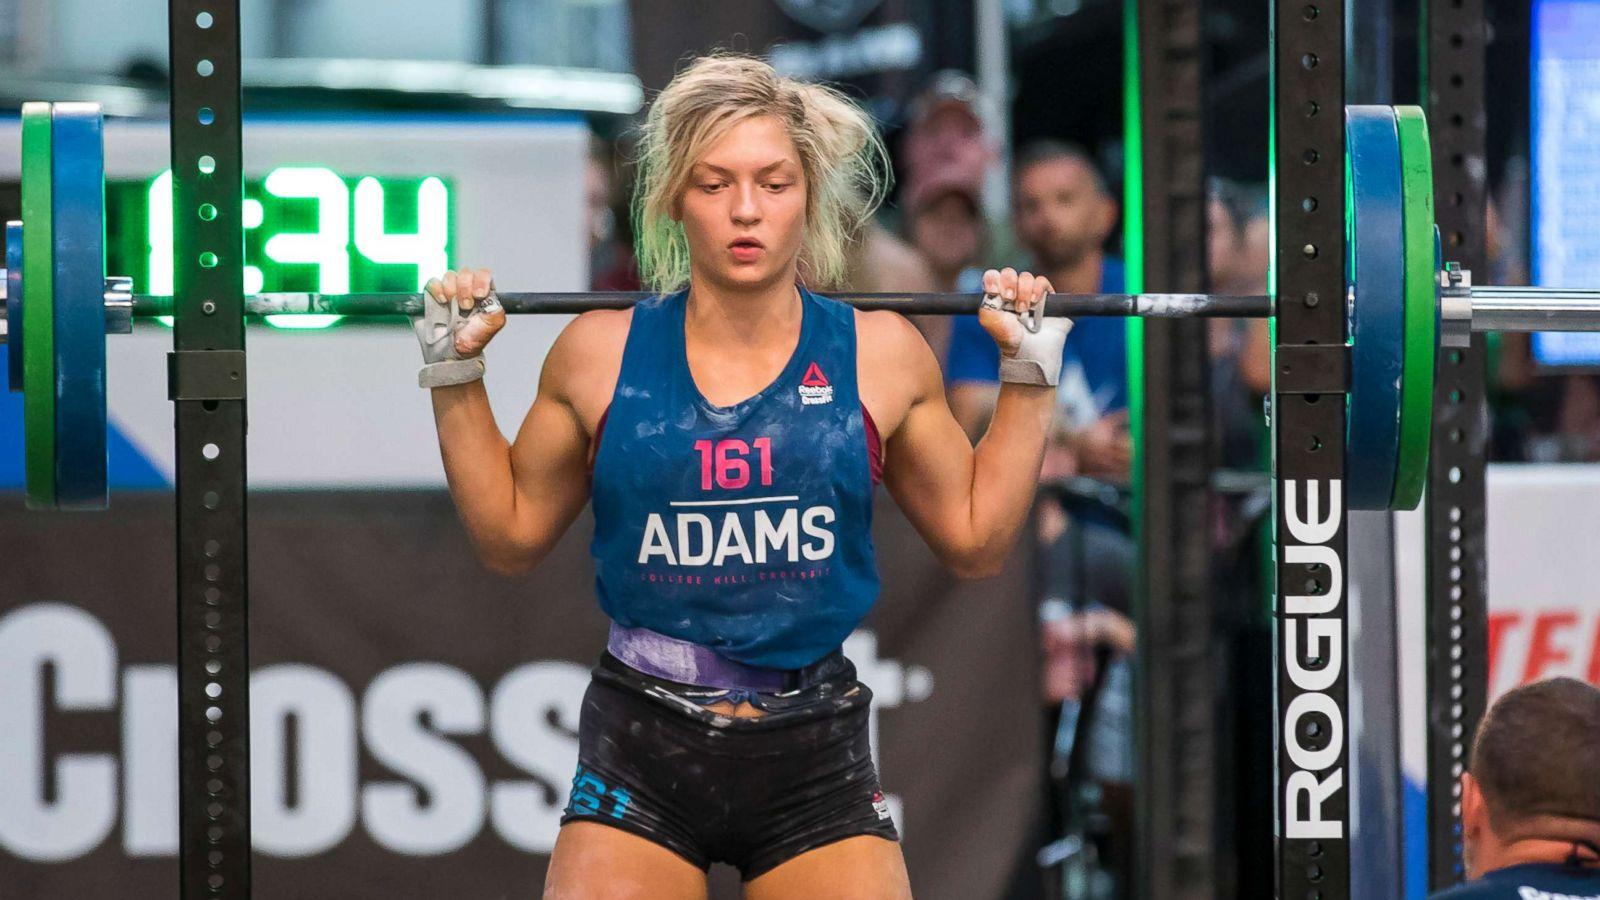 Is Haley Adams the next CrossFit phenom?